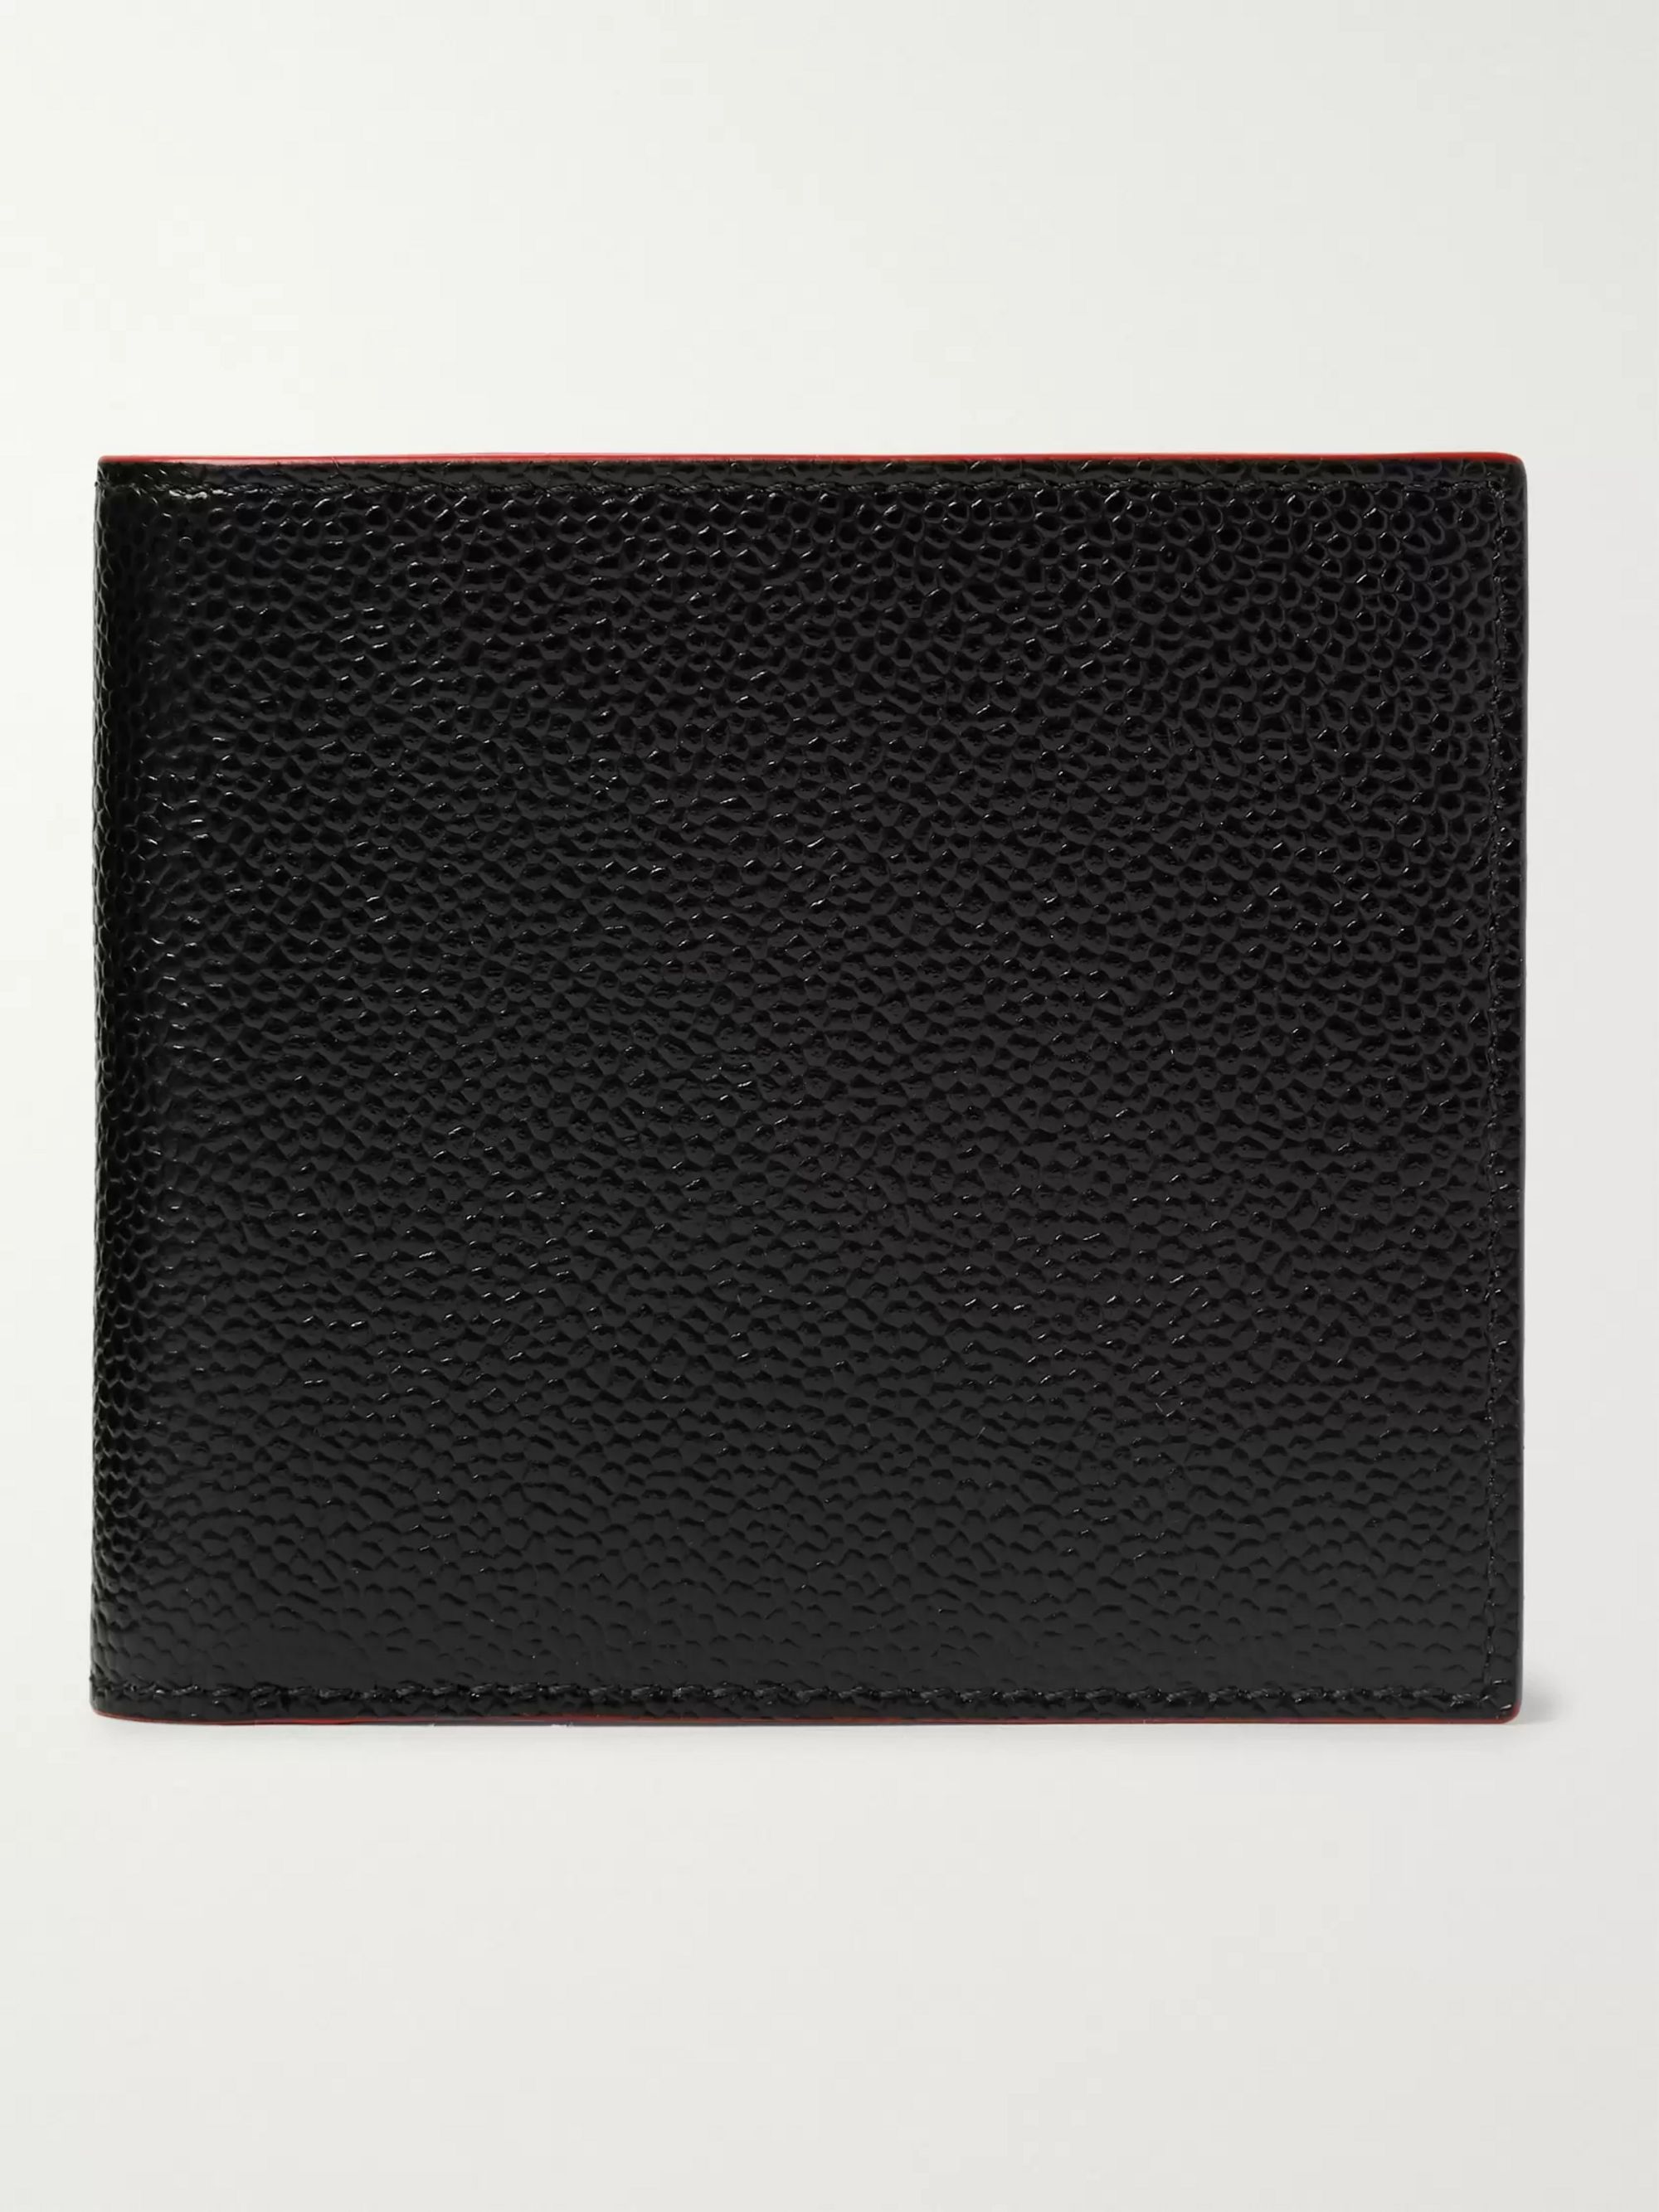 Black Pebble-Grain Leather Billfold Wallet | Thom Browne | MR PORTER